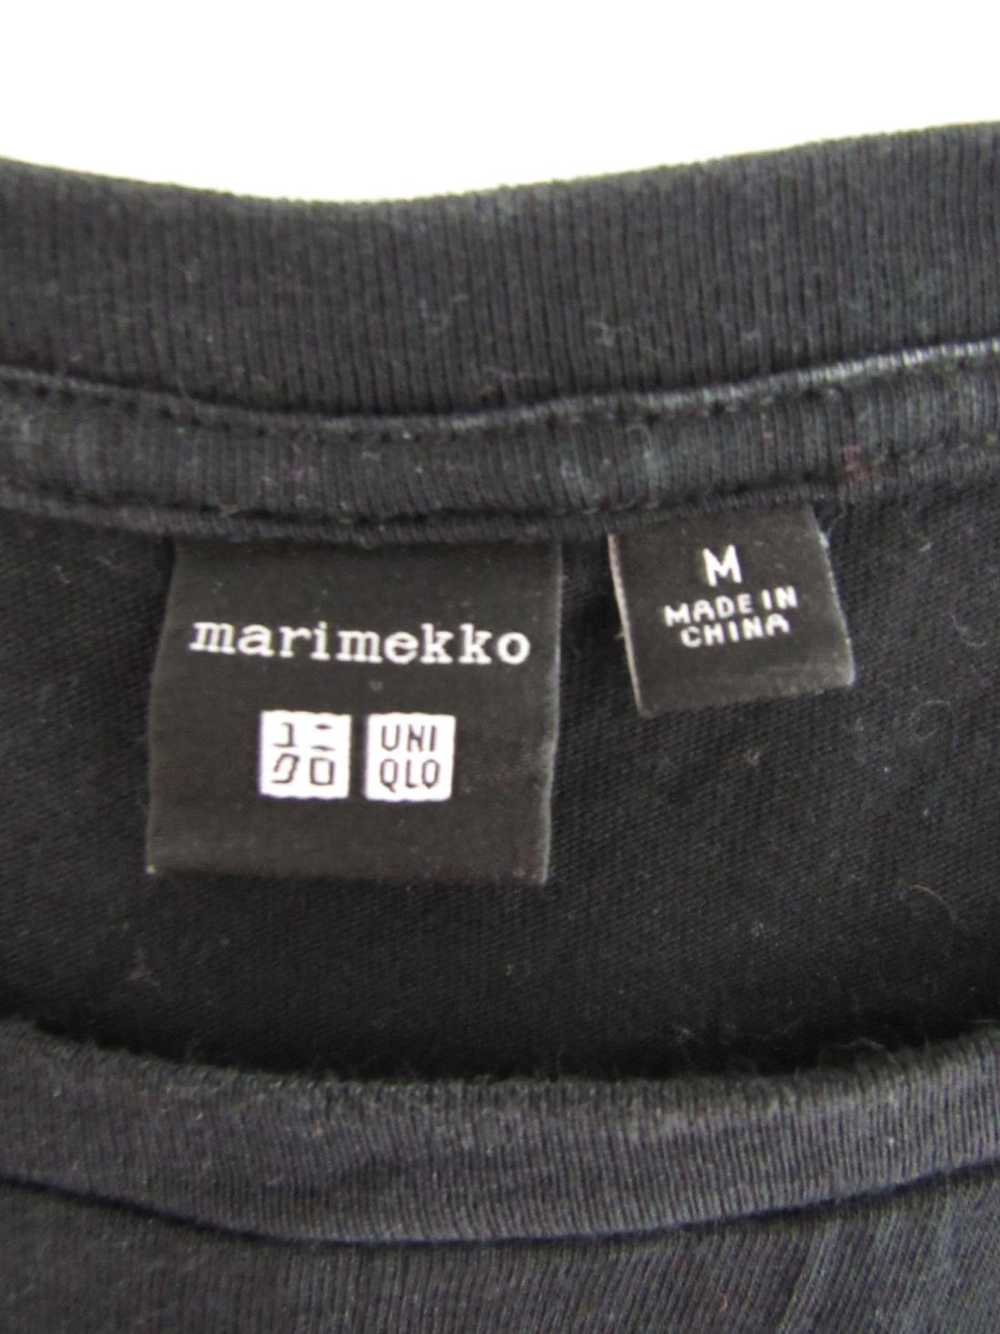 Marimekko Uni Qlo T-Shirt Top - image 3